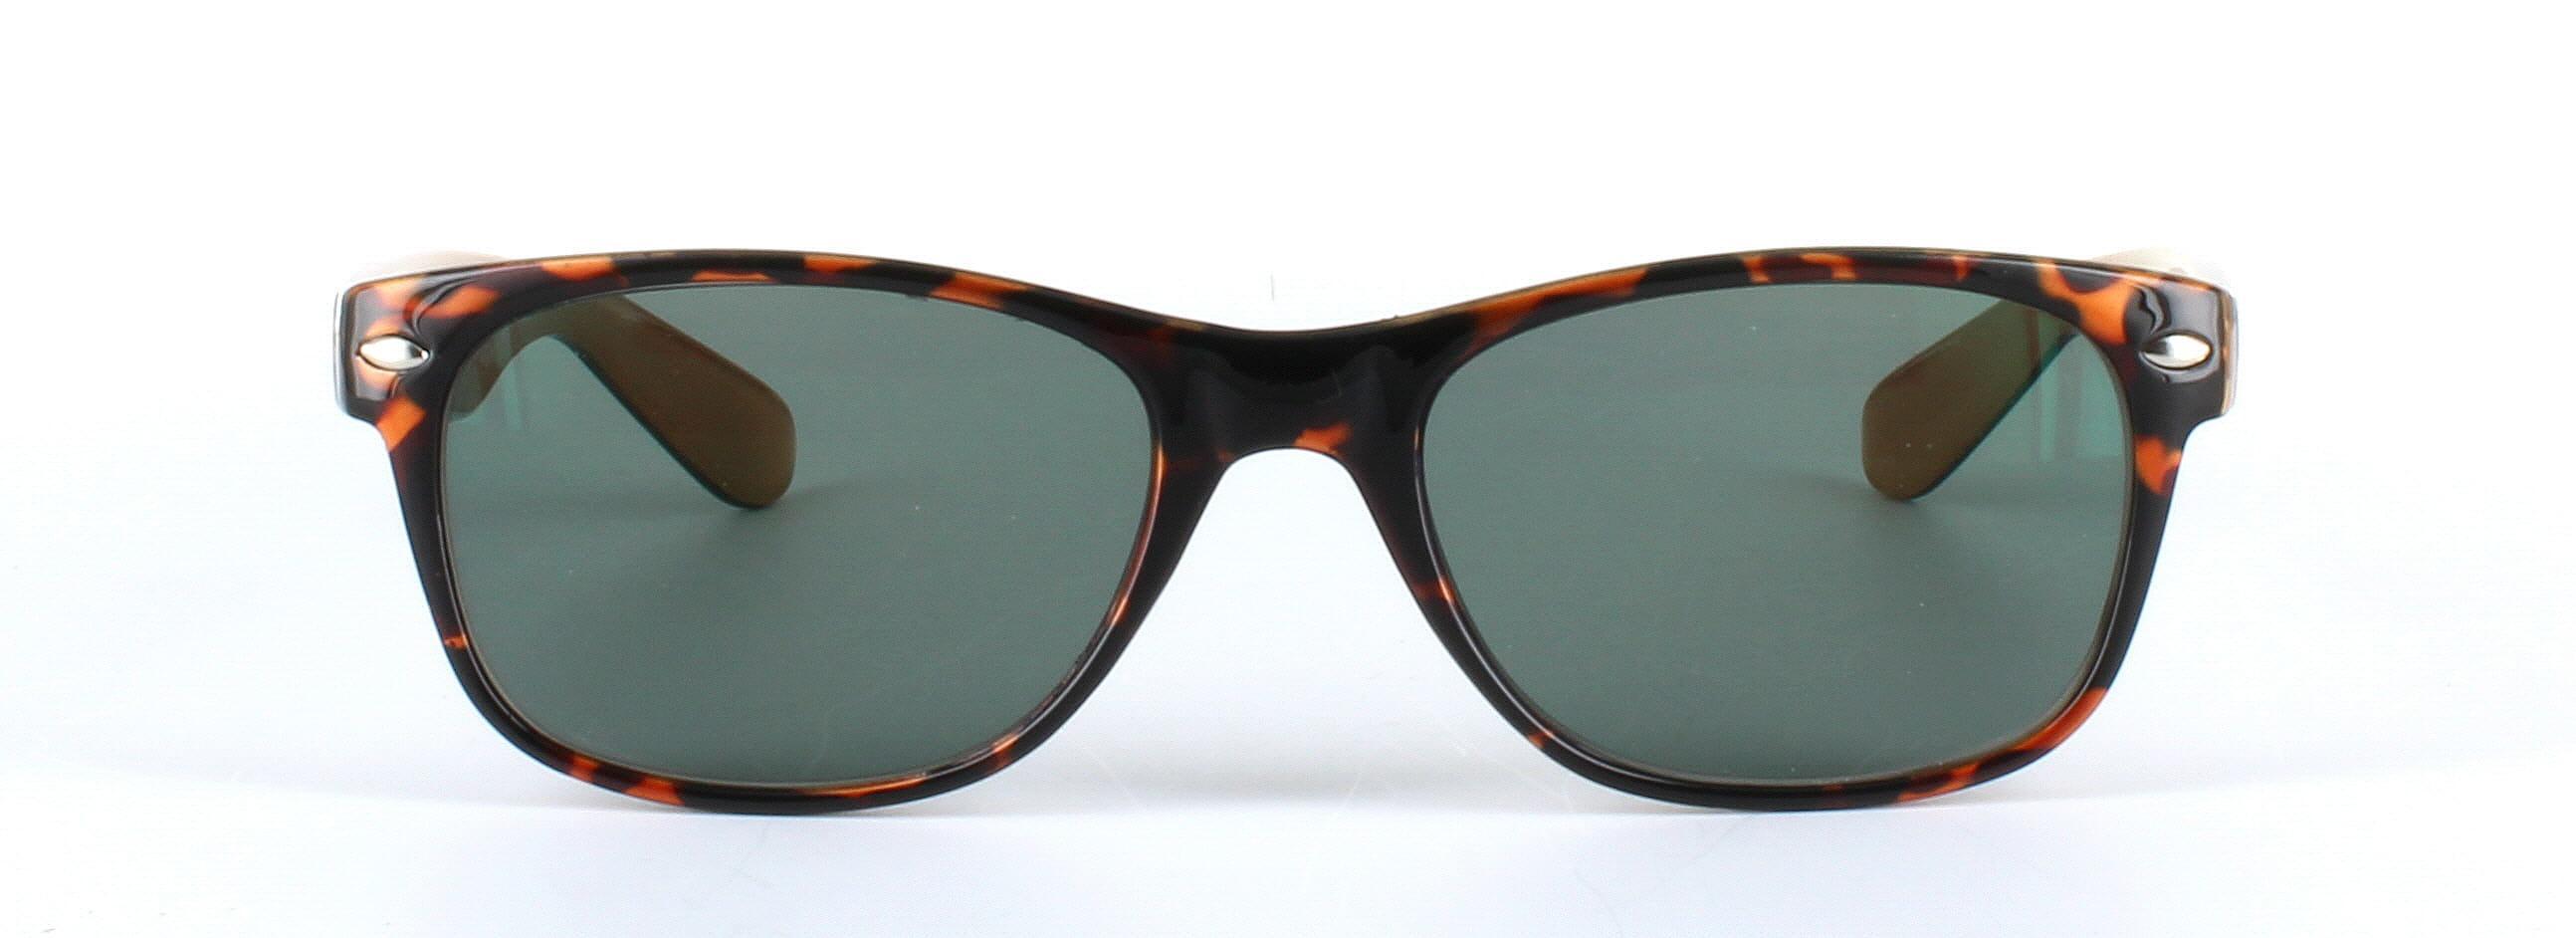 Lester Tortoise Full Rim Oval Plastic Prescription Sunglasses - Image View 5